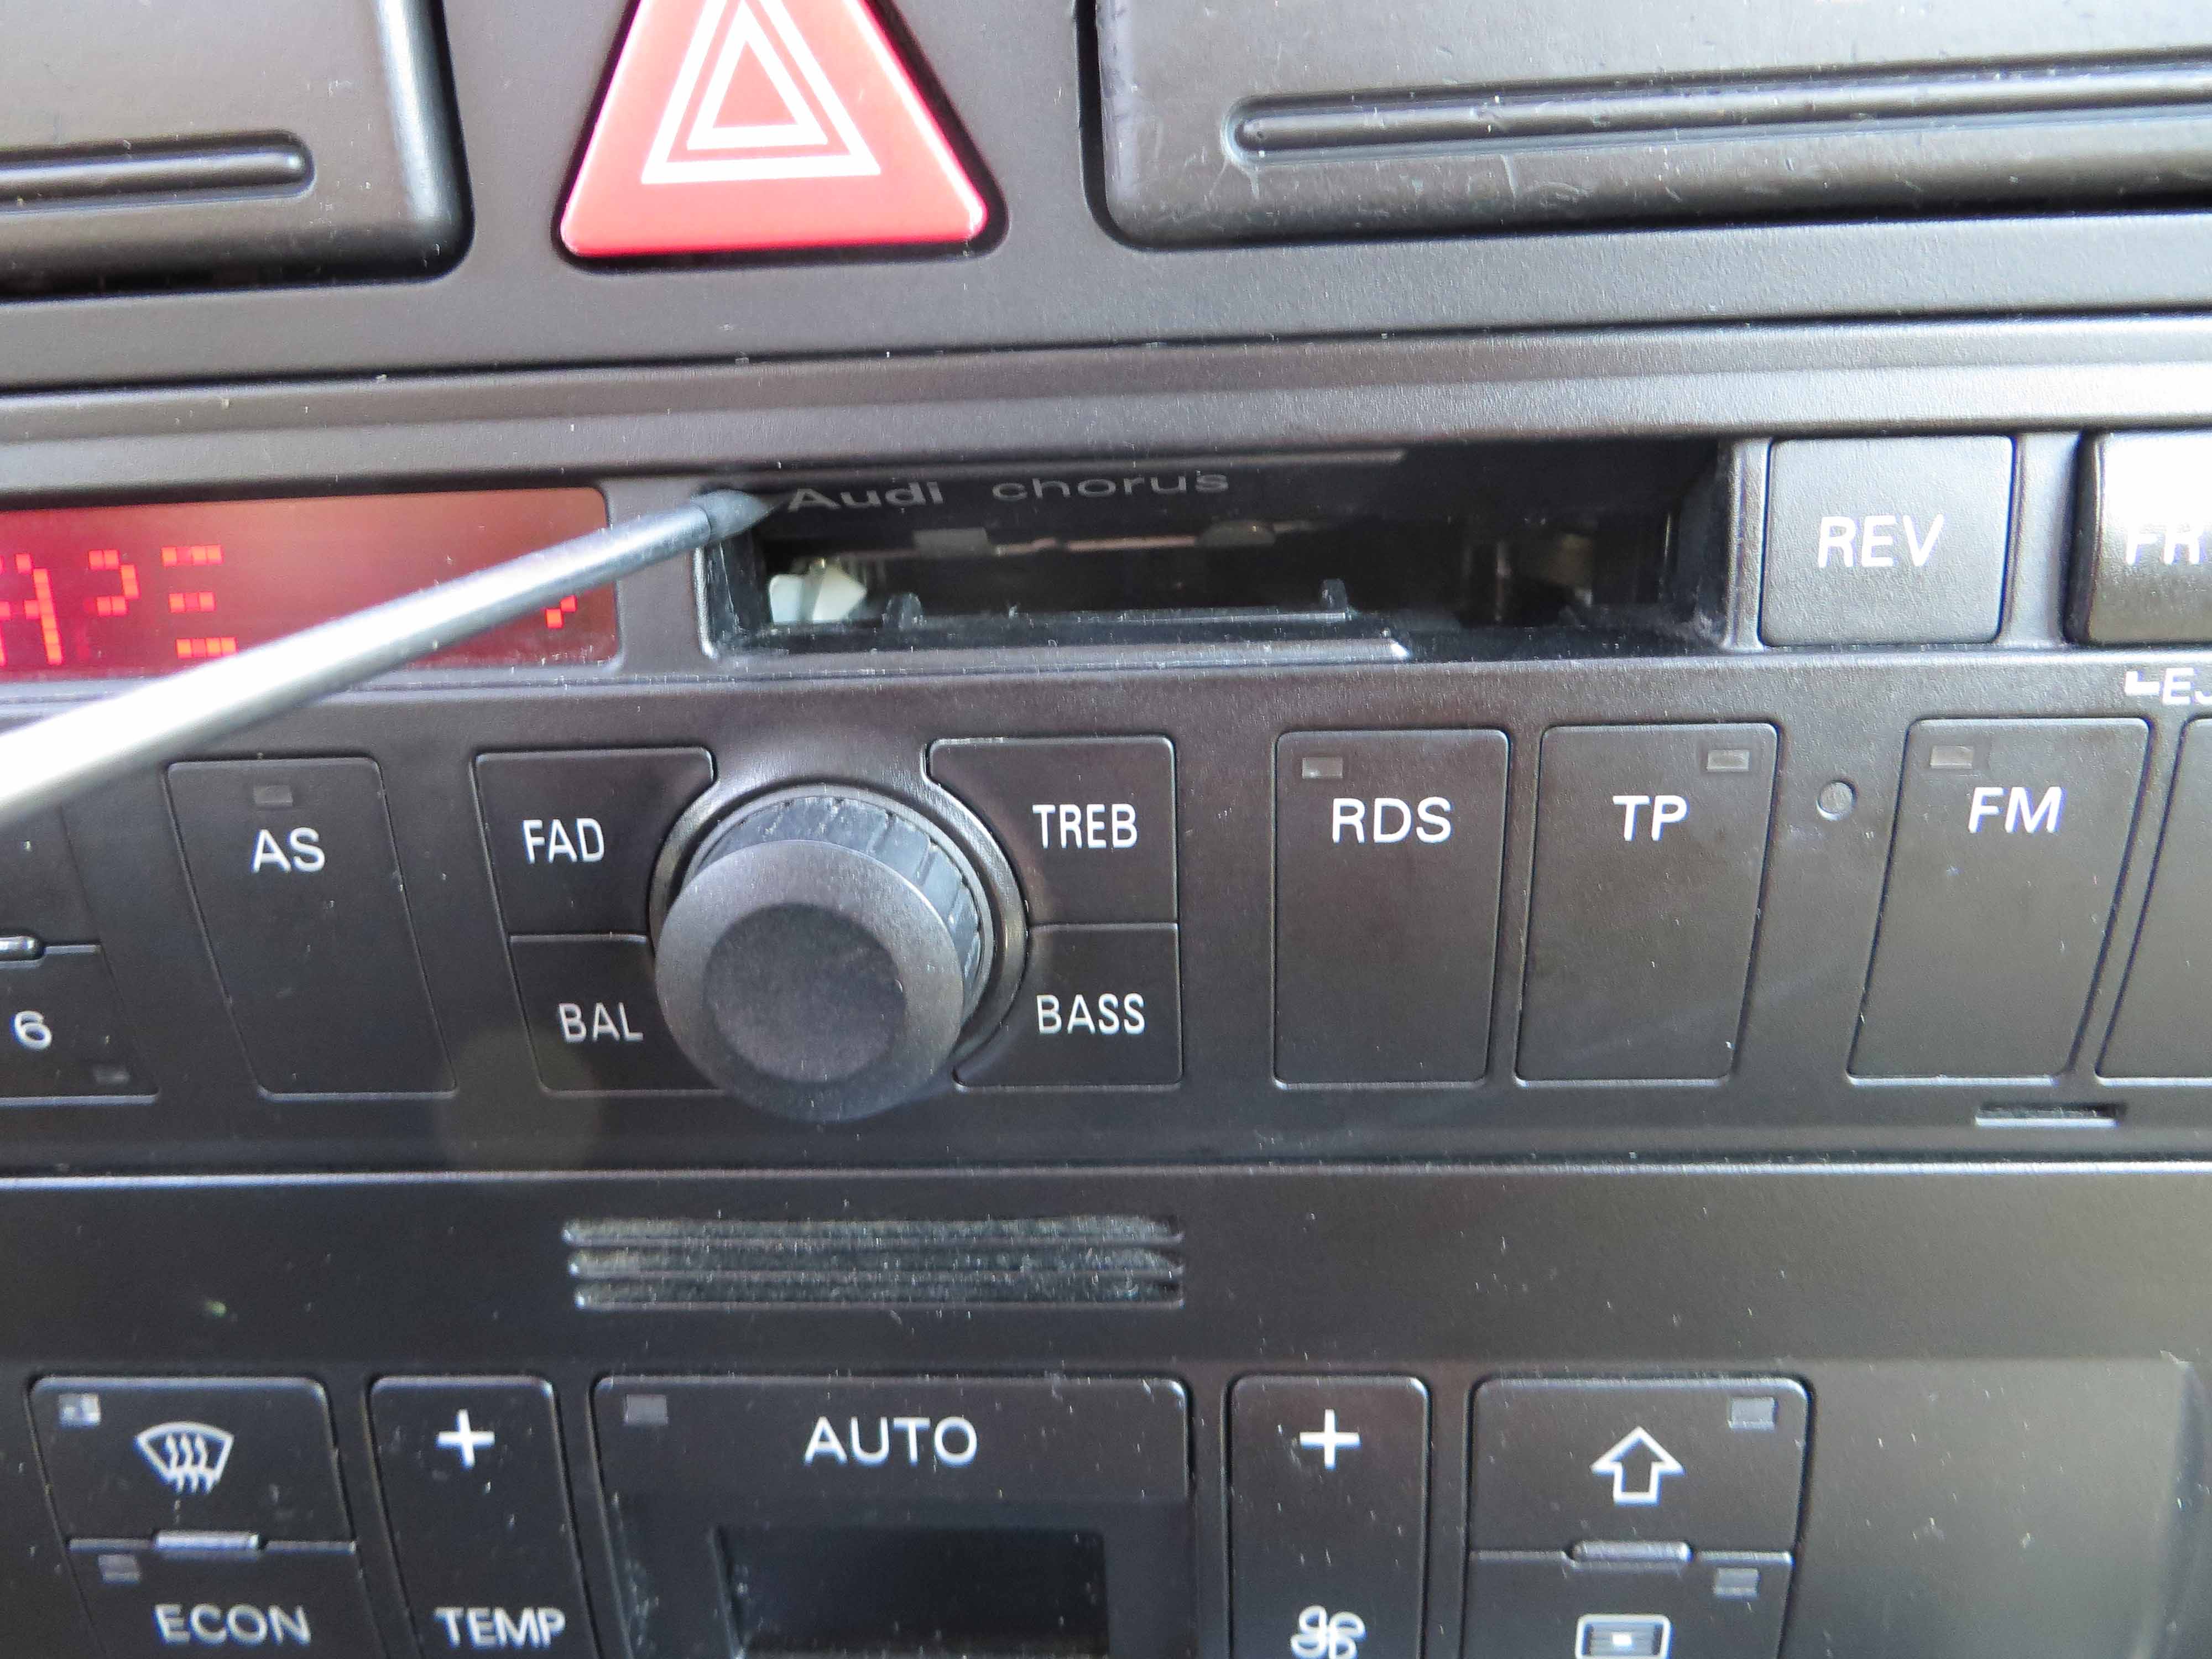 Originalradio Audi Concert 2 bringt keinen Ton raus - HIFI - Handy - NAVI -  Audi A2 Club Deutschland